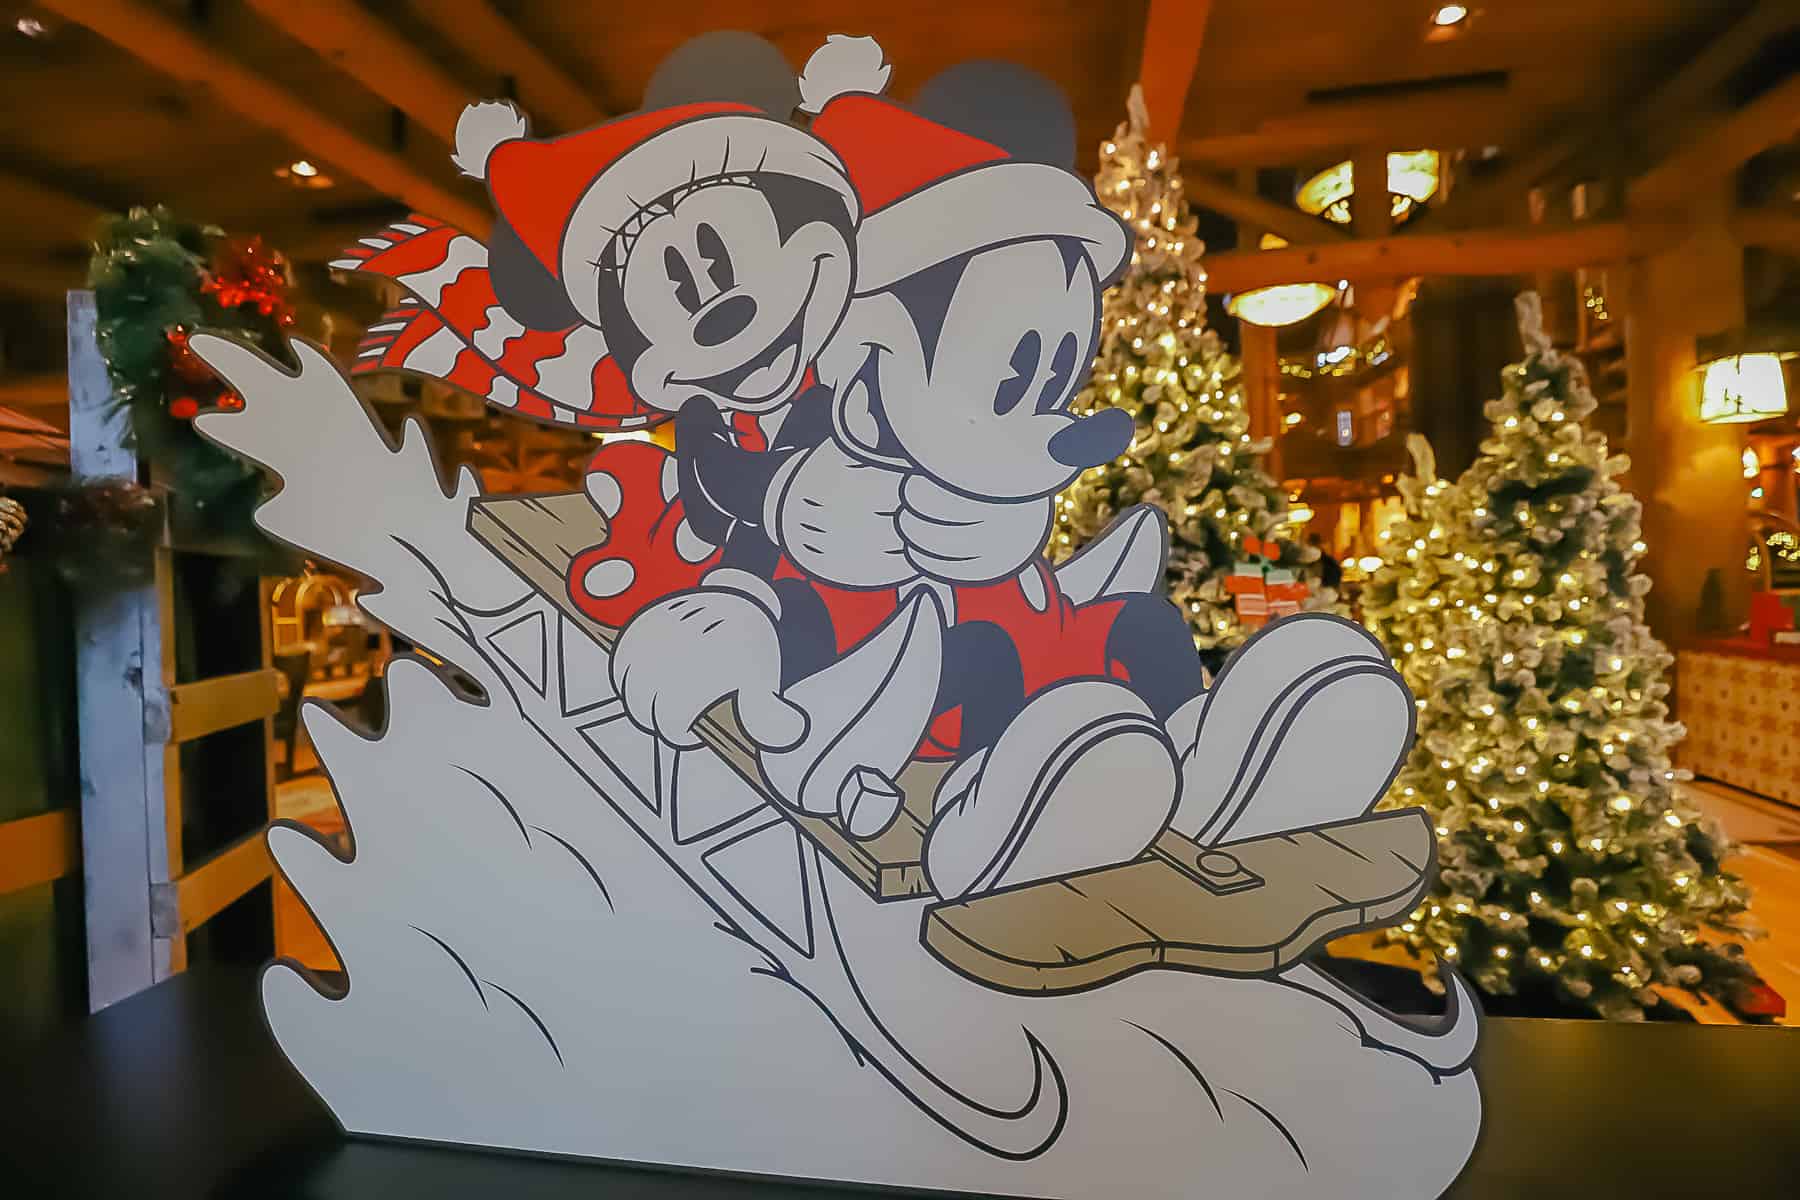 Cardboard cutout of Mickey and Minnie on a sleigh 